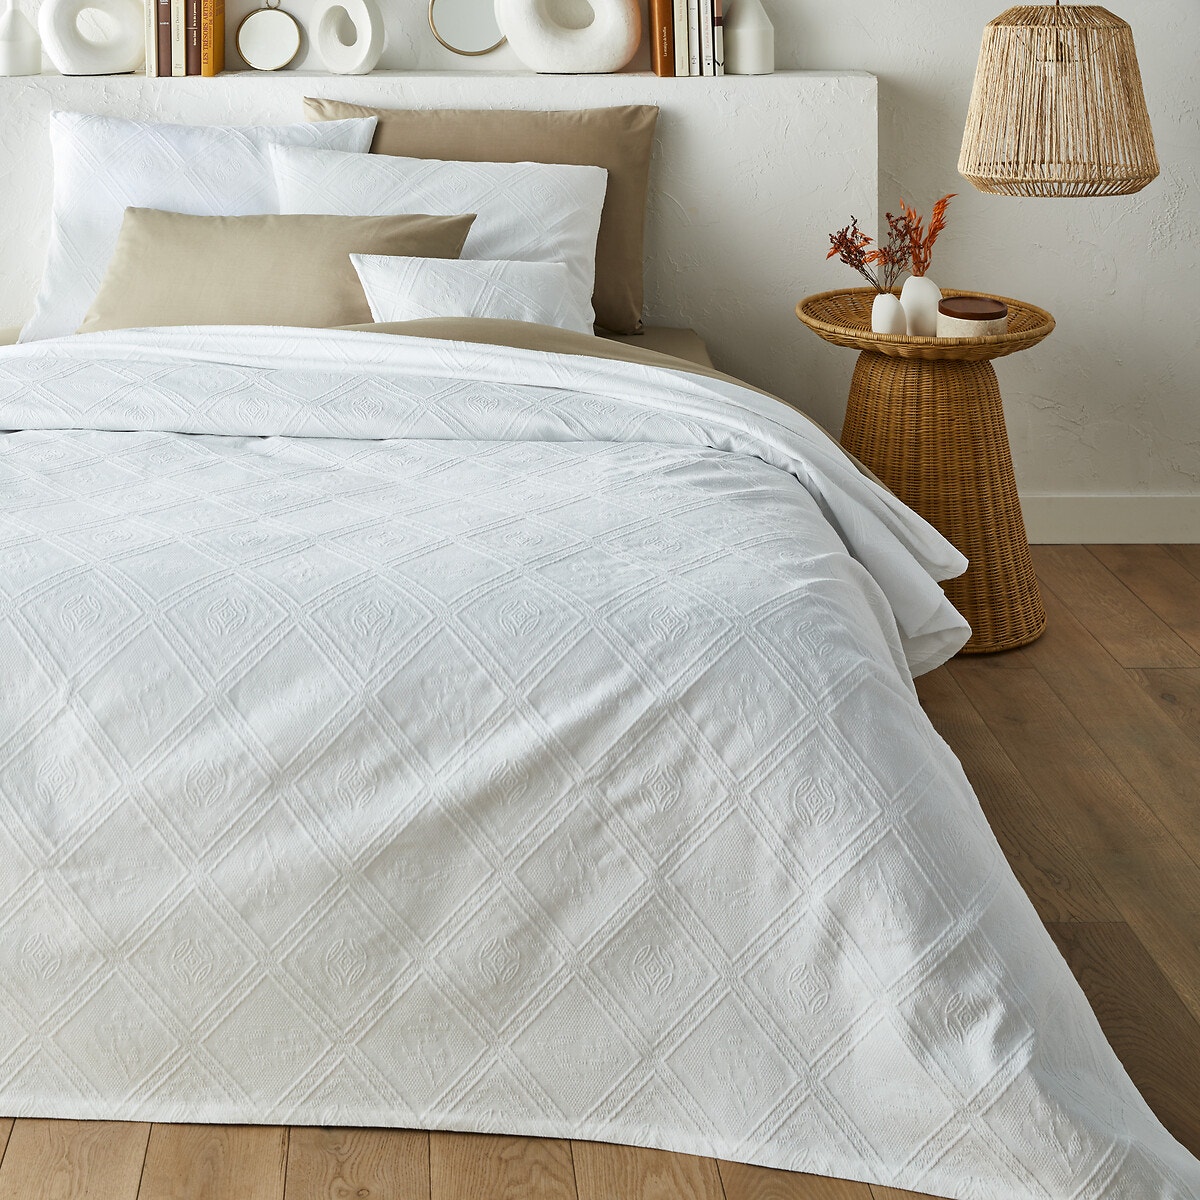 La Redoute for Business > Λευκά είδη > Υπνοδωμάτιο > Καλύμματα κρεβατιού, κουβερλί, παπλώματα Ριχτάρι κρεβατιού INDO 160x230 cm